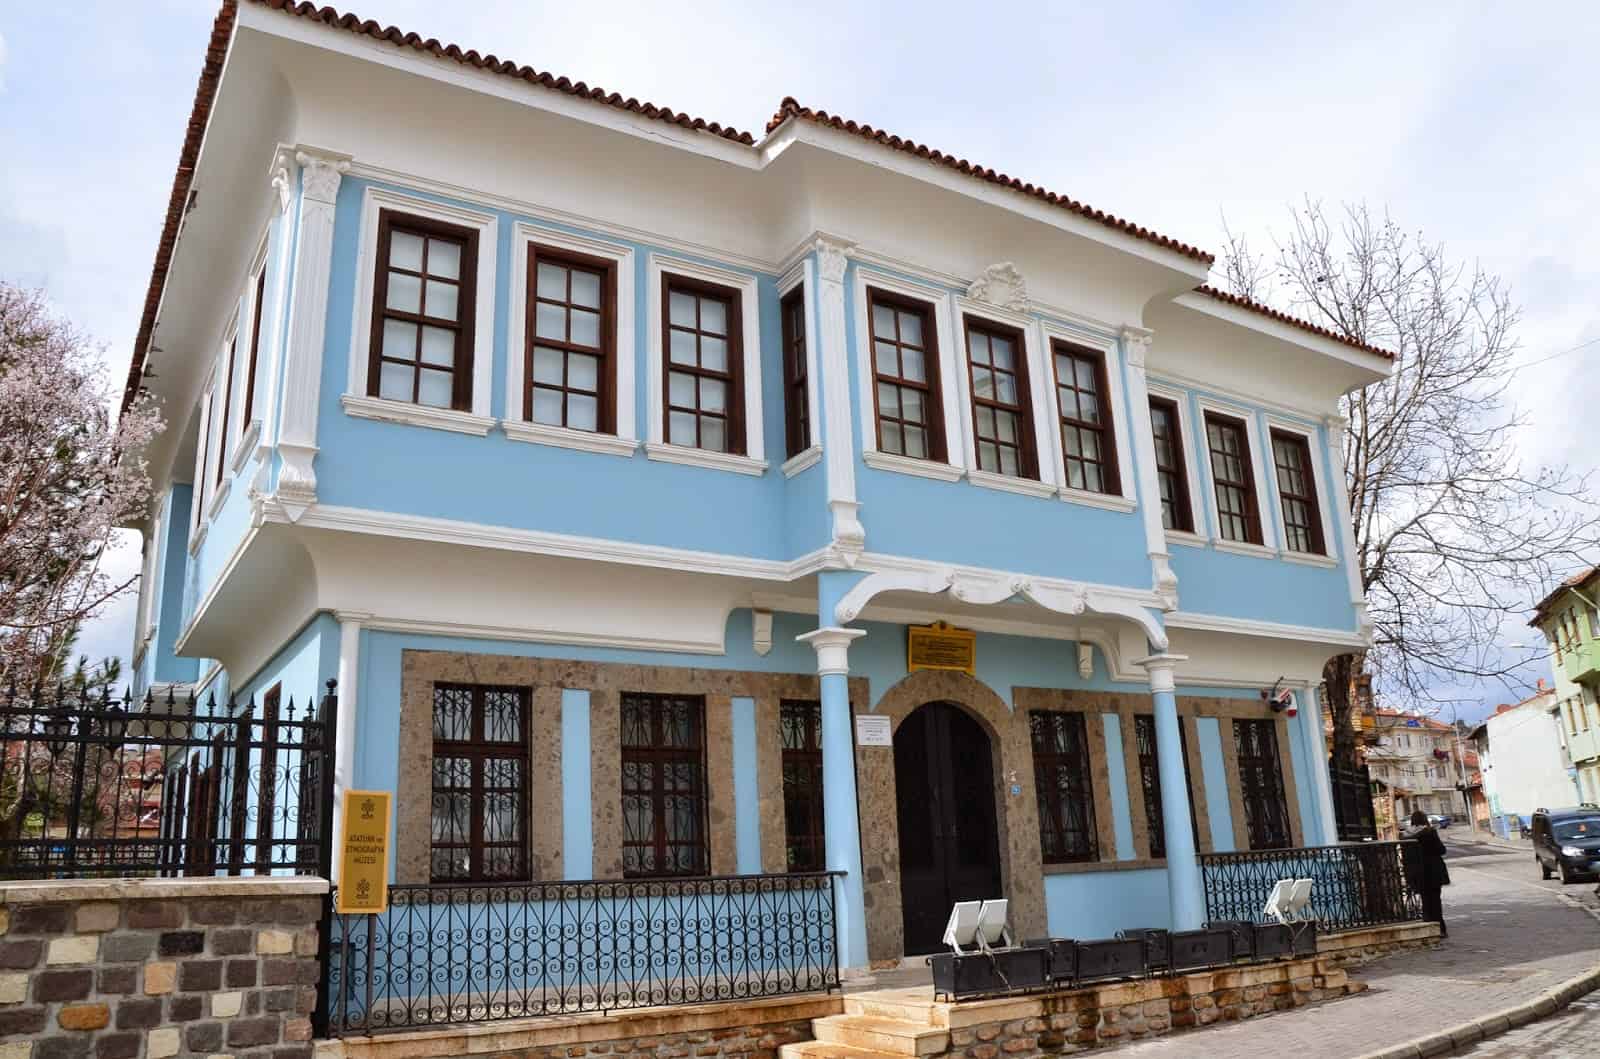 Atatürk House and Ethnography Museum in Uşak, Turkey